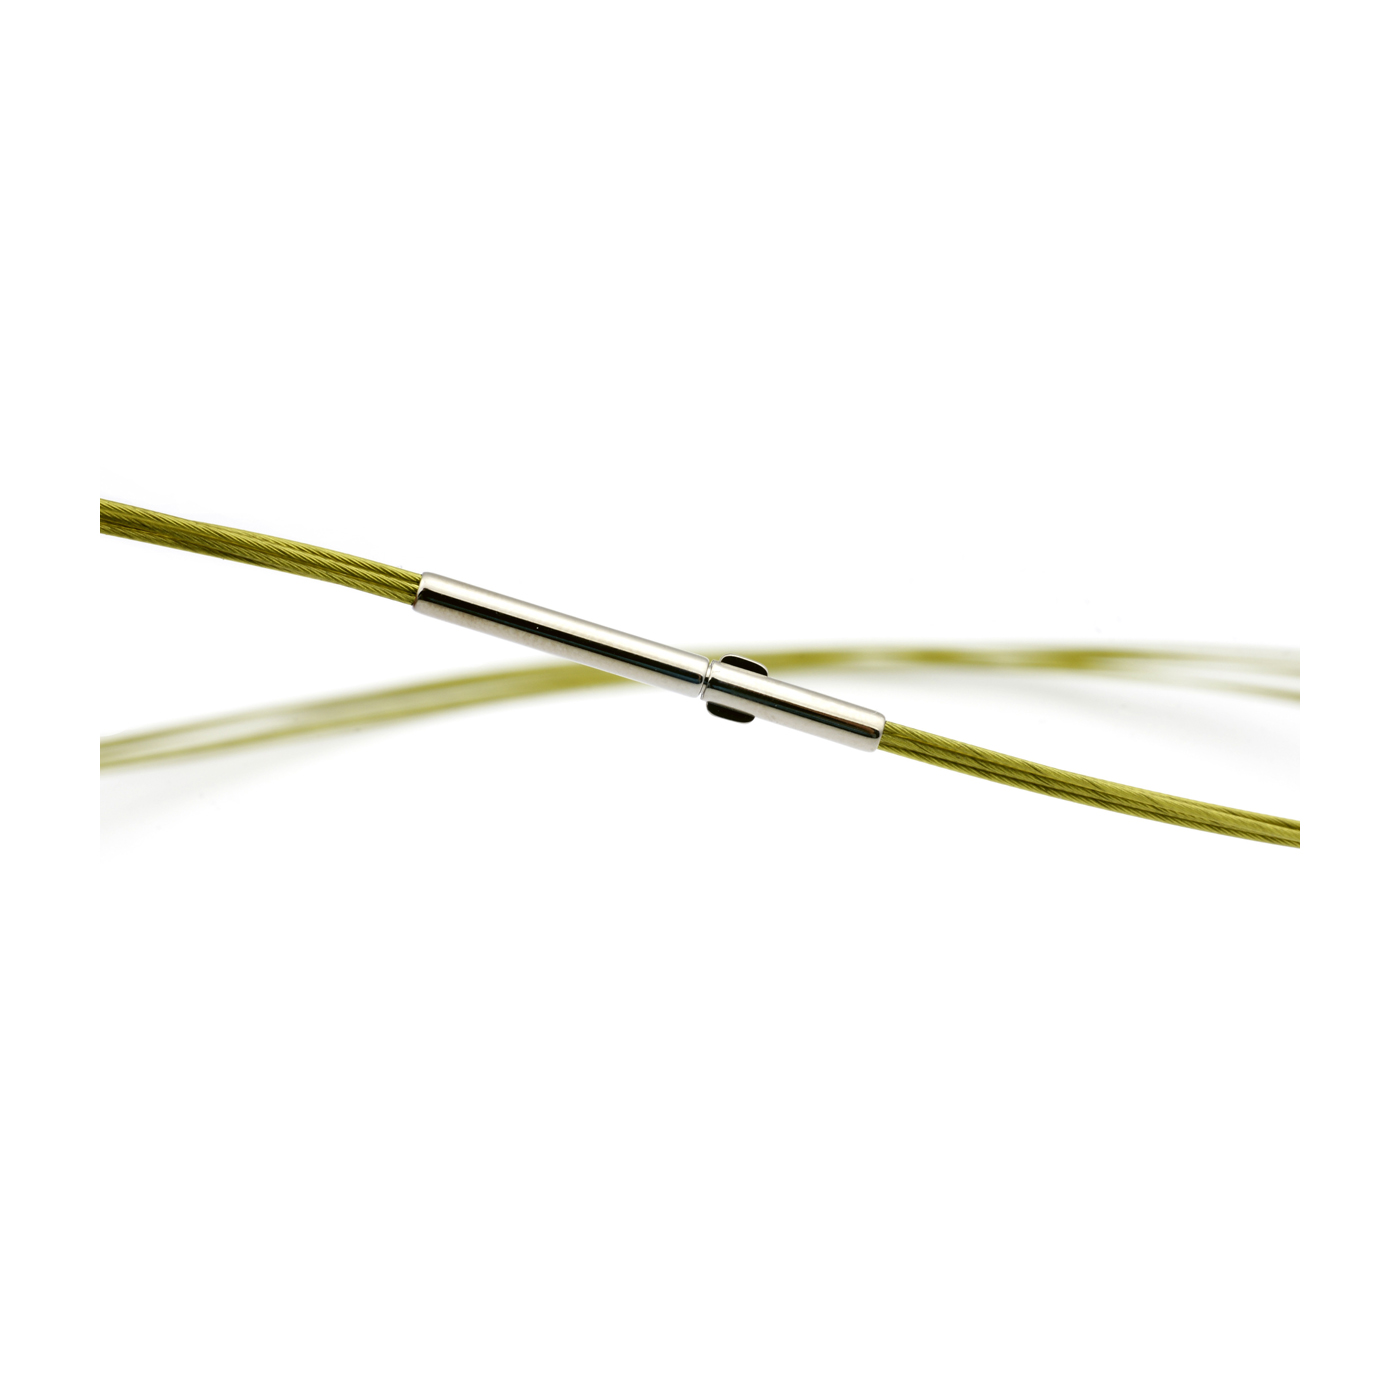 Seilcollier "Colour Cable", ES, grün-gold, 5-reihig, 45 cm - 1 Stück